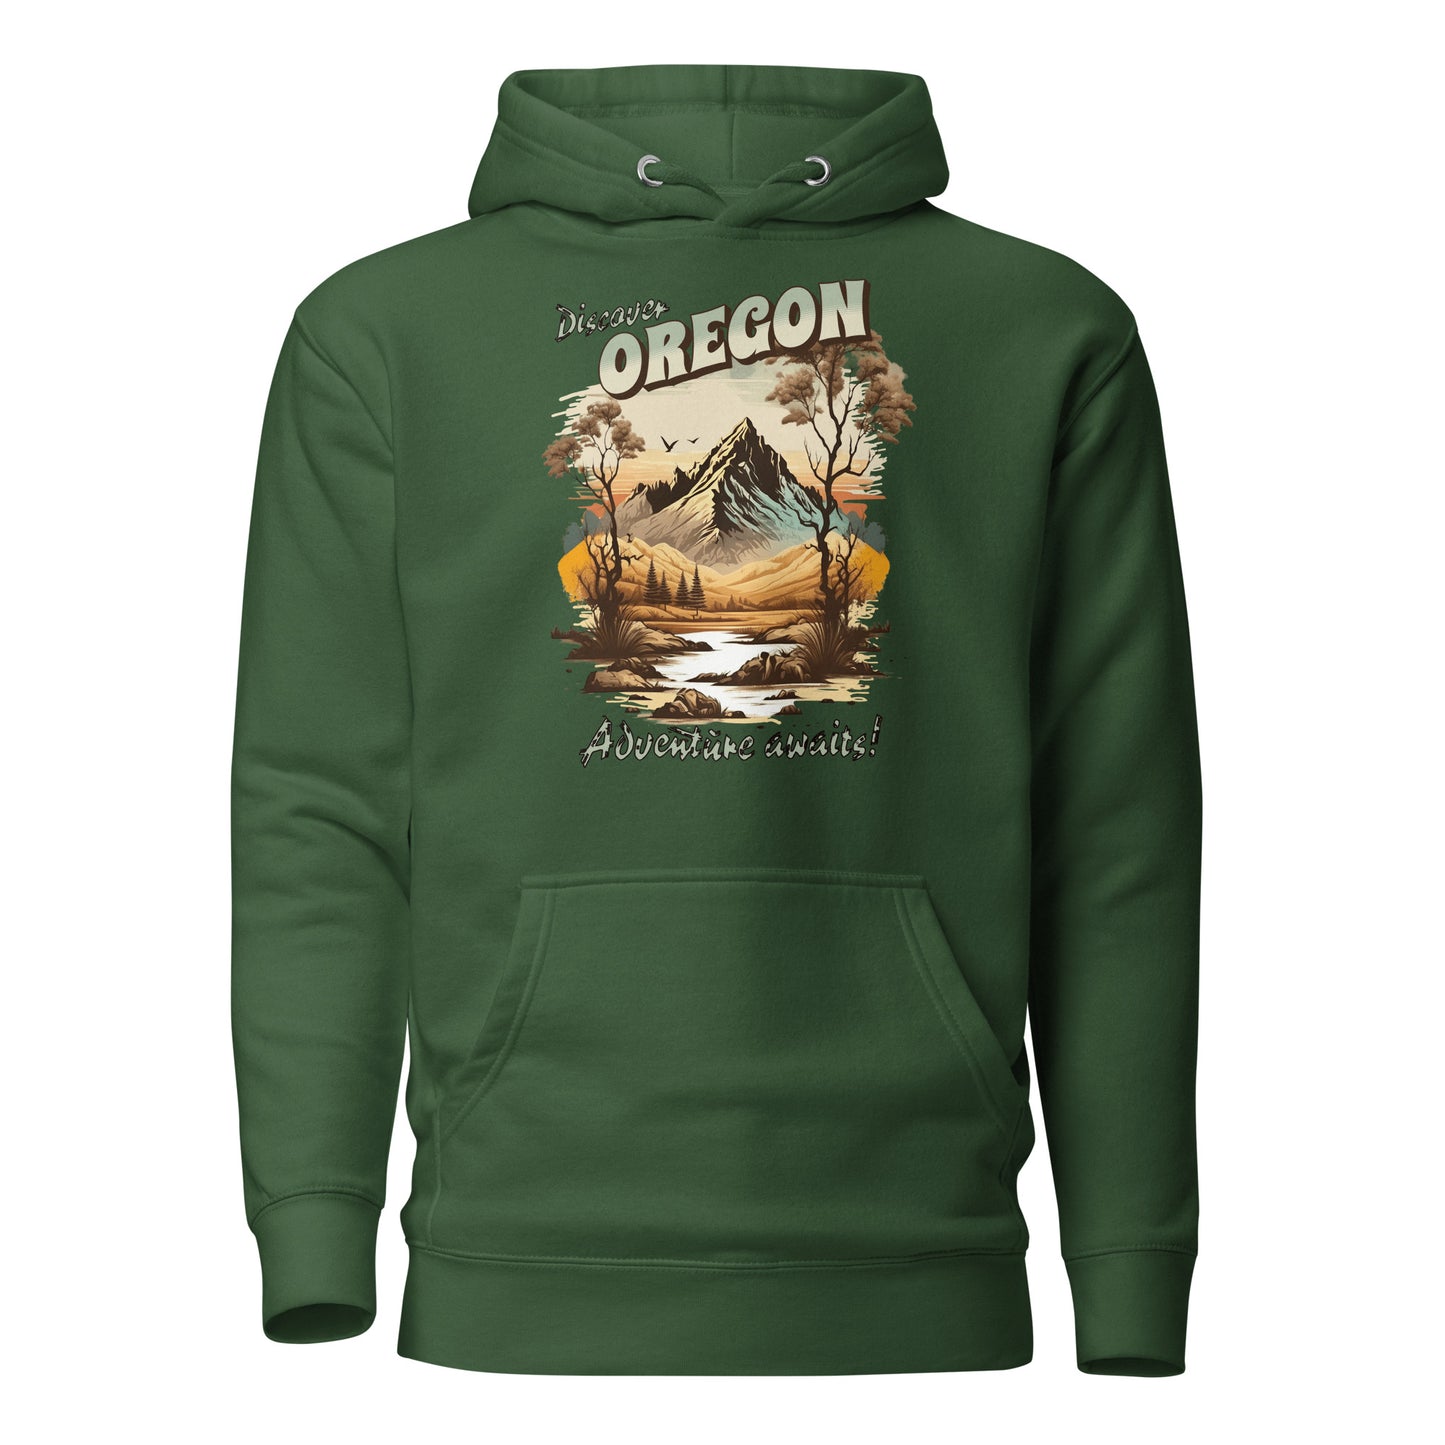 Discover Oregon - Unisex Hoodie